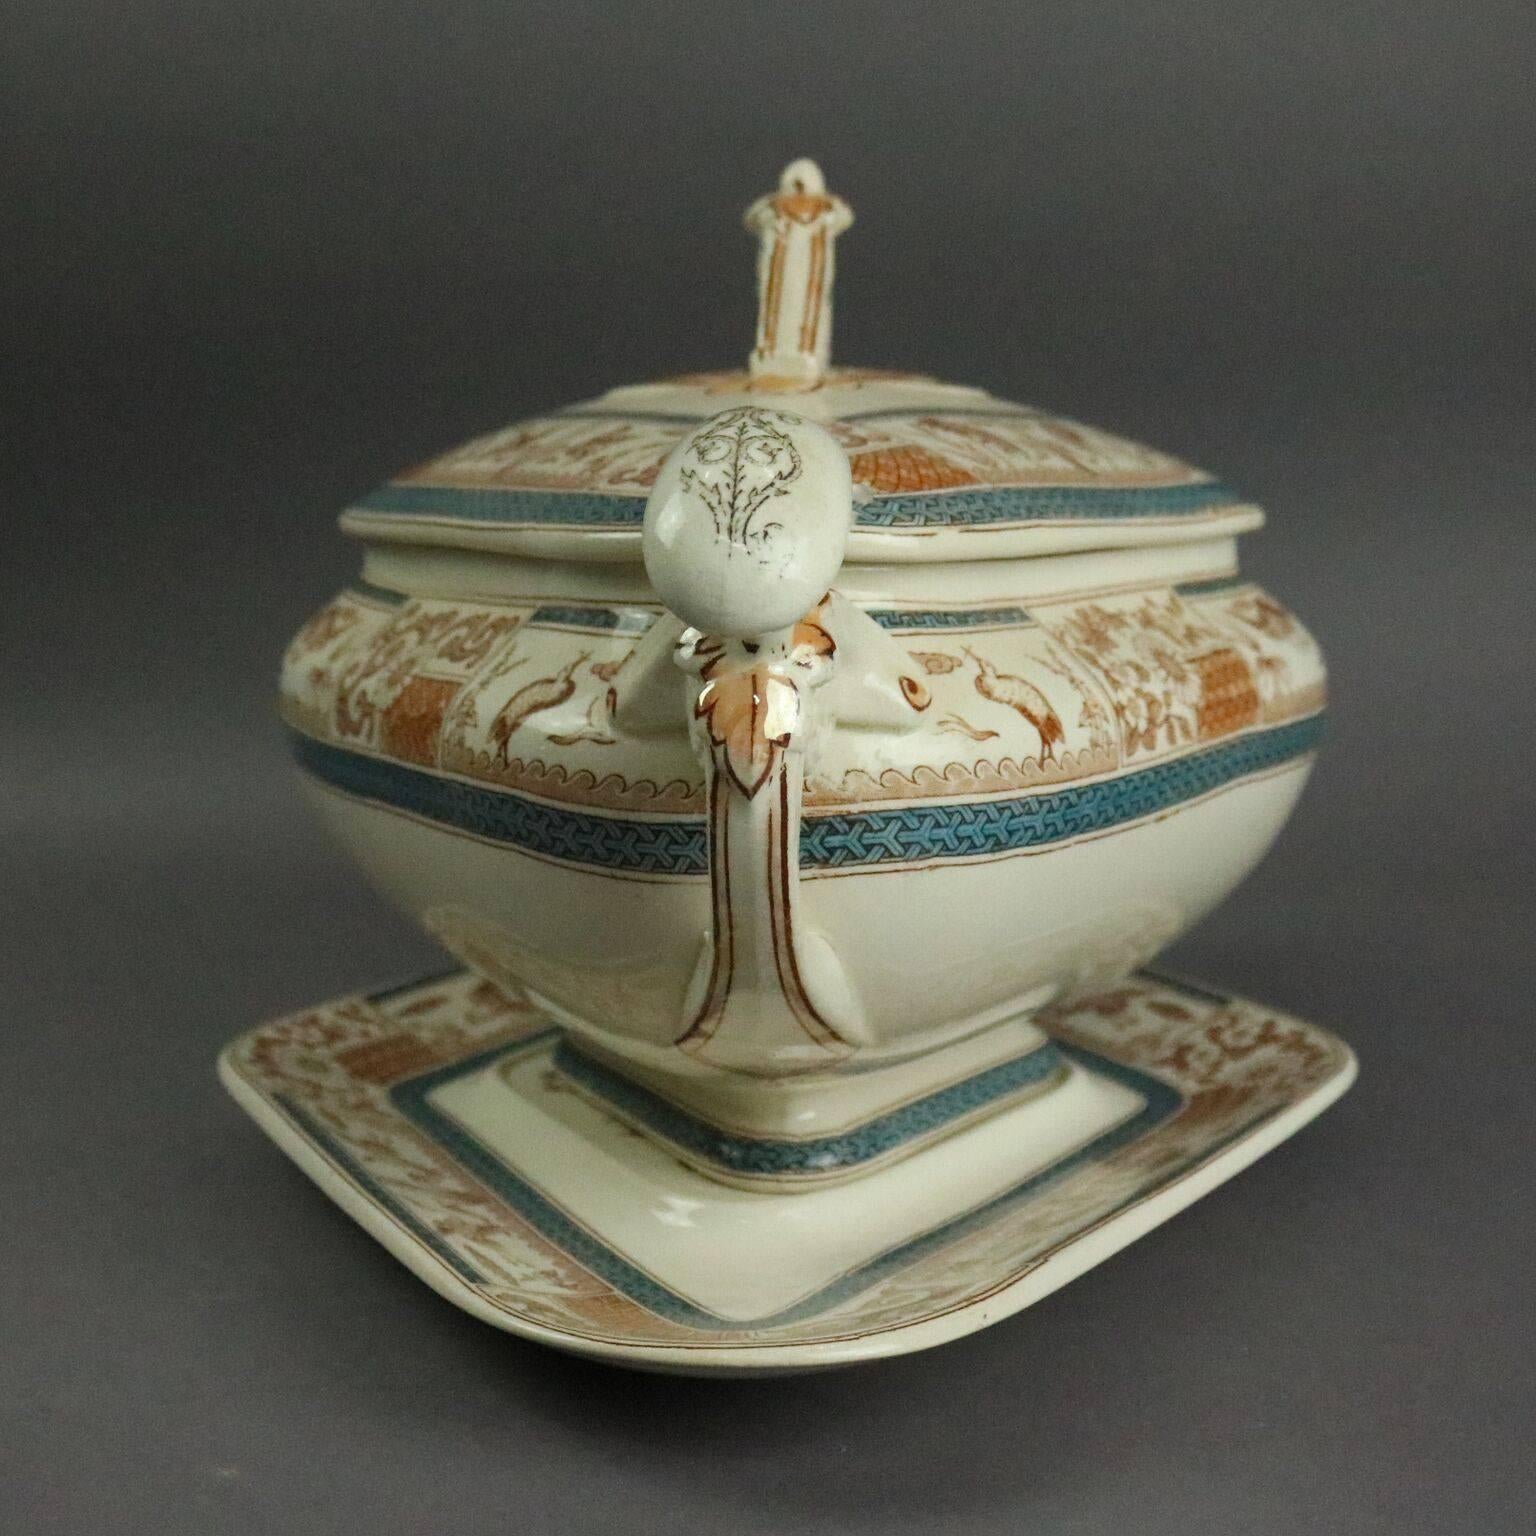 British Antique Aesthetic Movement English Porcelain Staffordshire Tureen, circa 1870